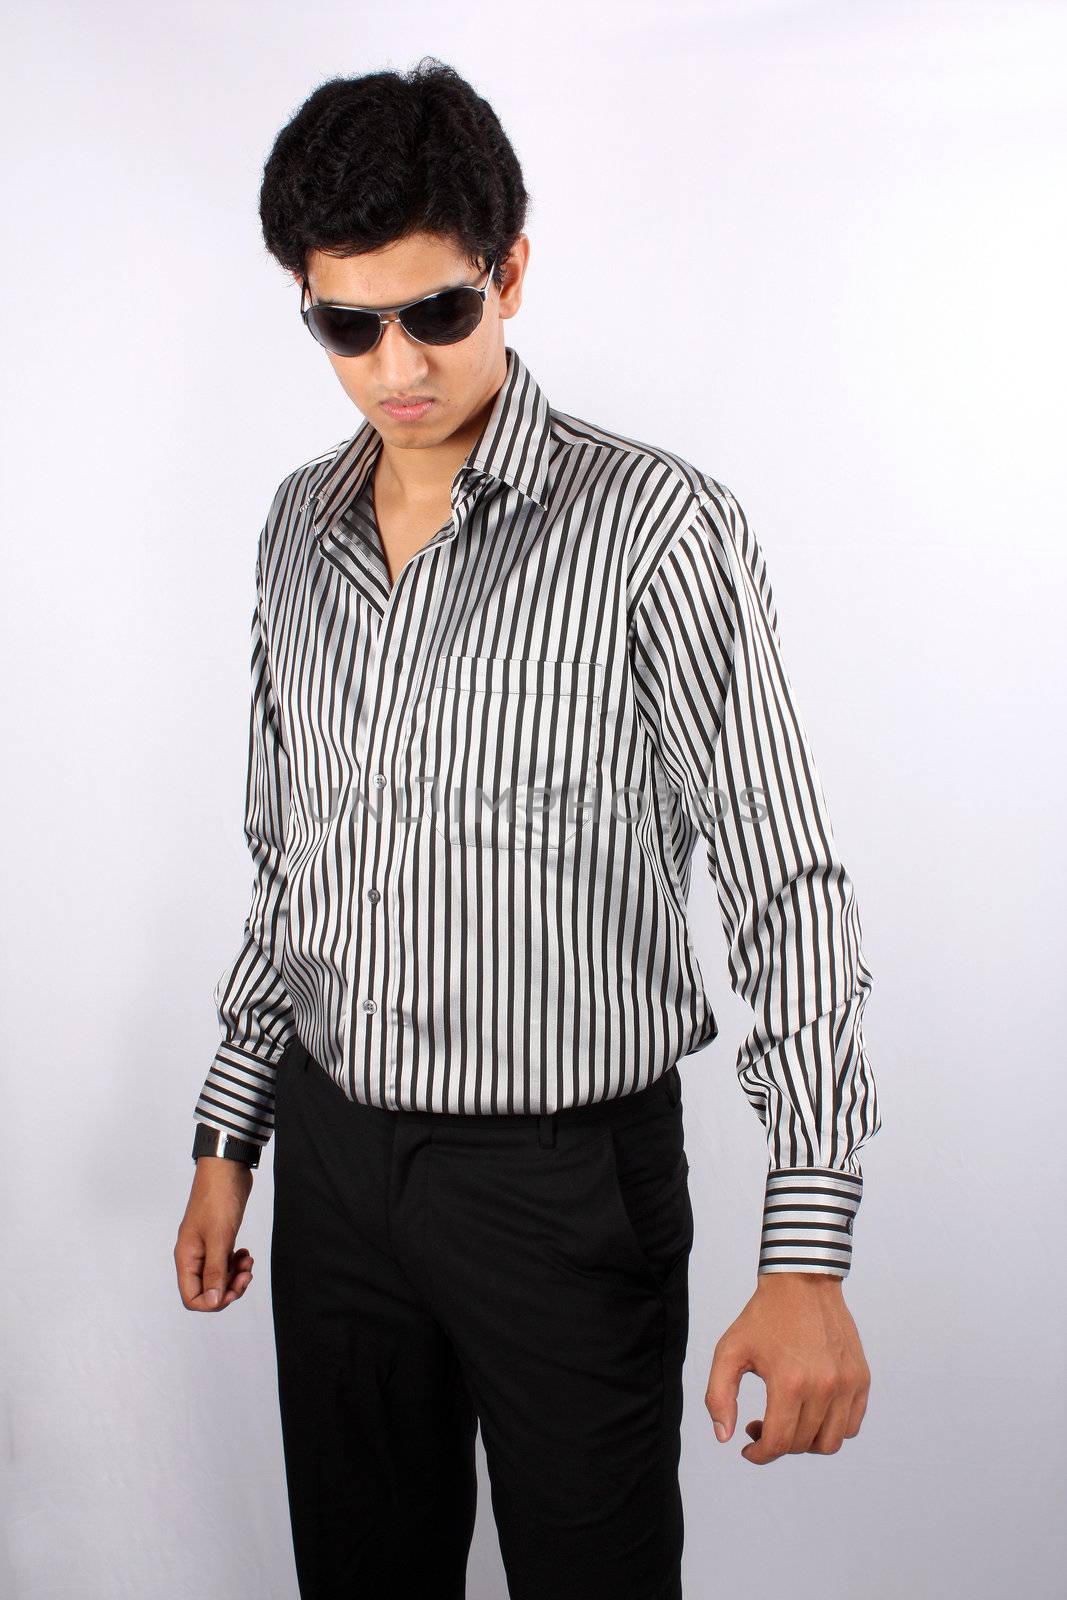 A stylish Indian teenager wearing sunglasses, on white studio background.